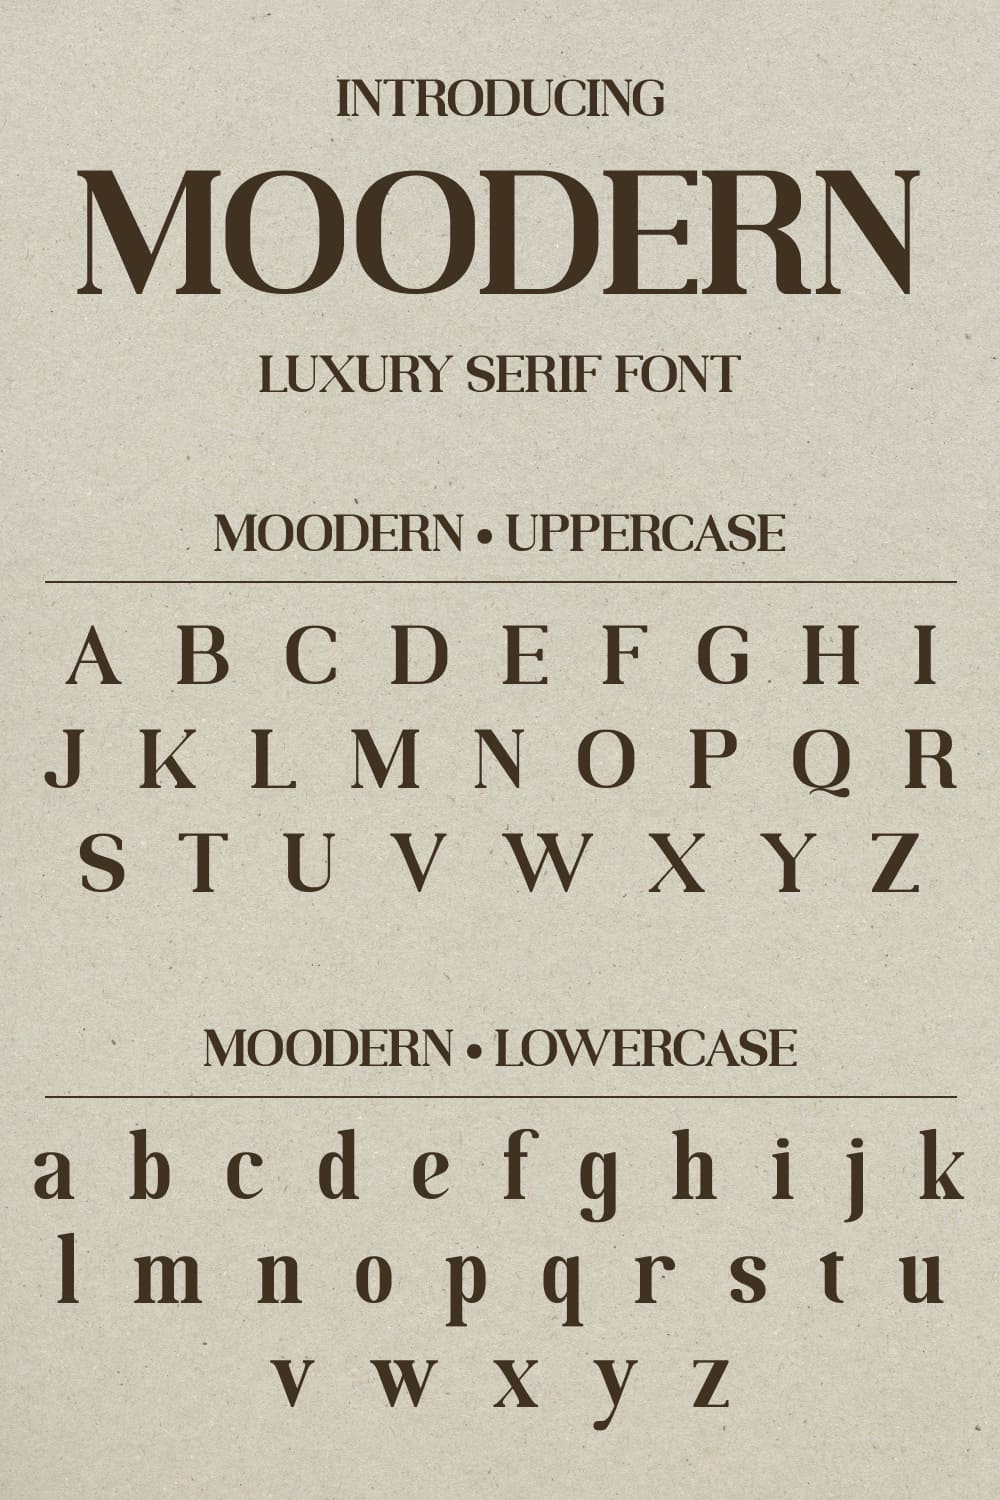 Free modern font - Pinterest.